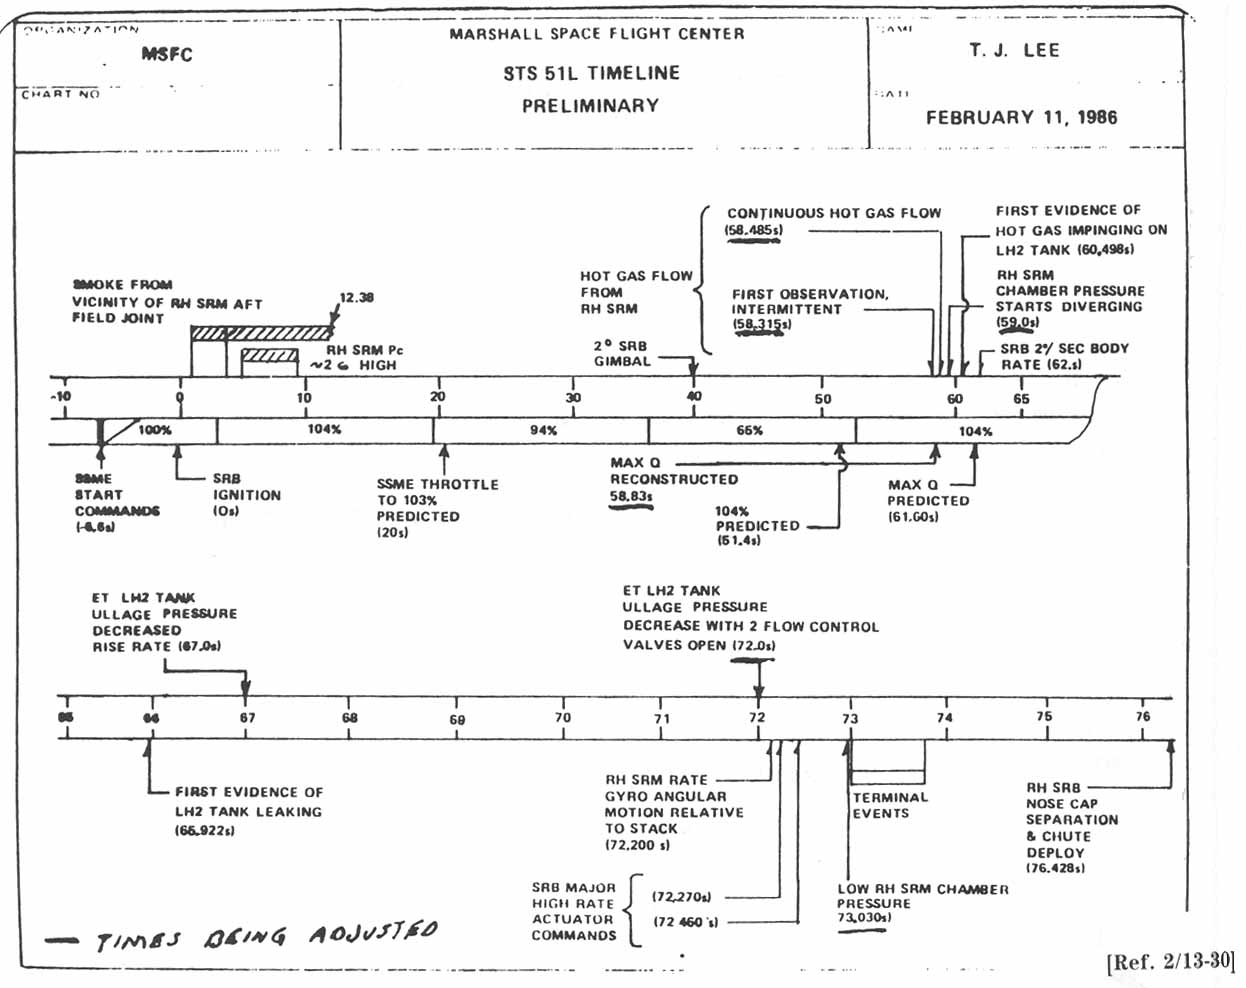 STS 51-L TIMELINE PRELIMINARY.